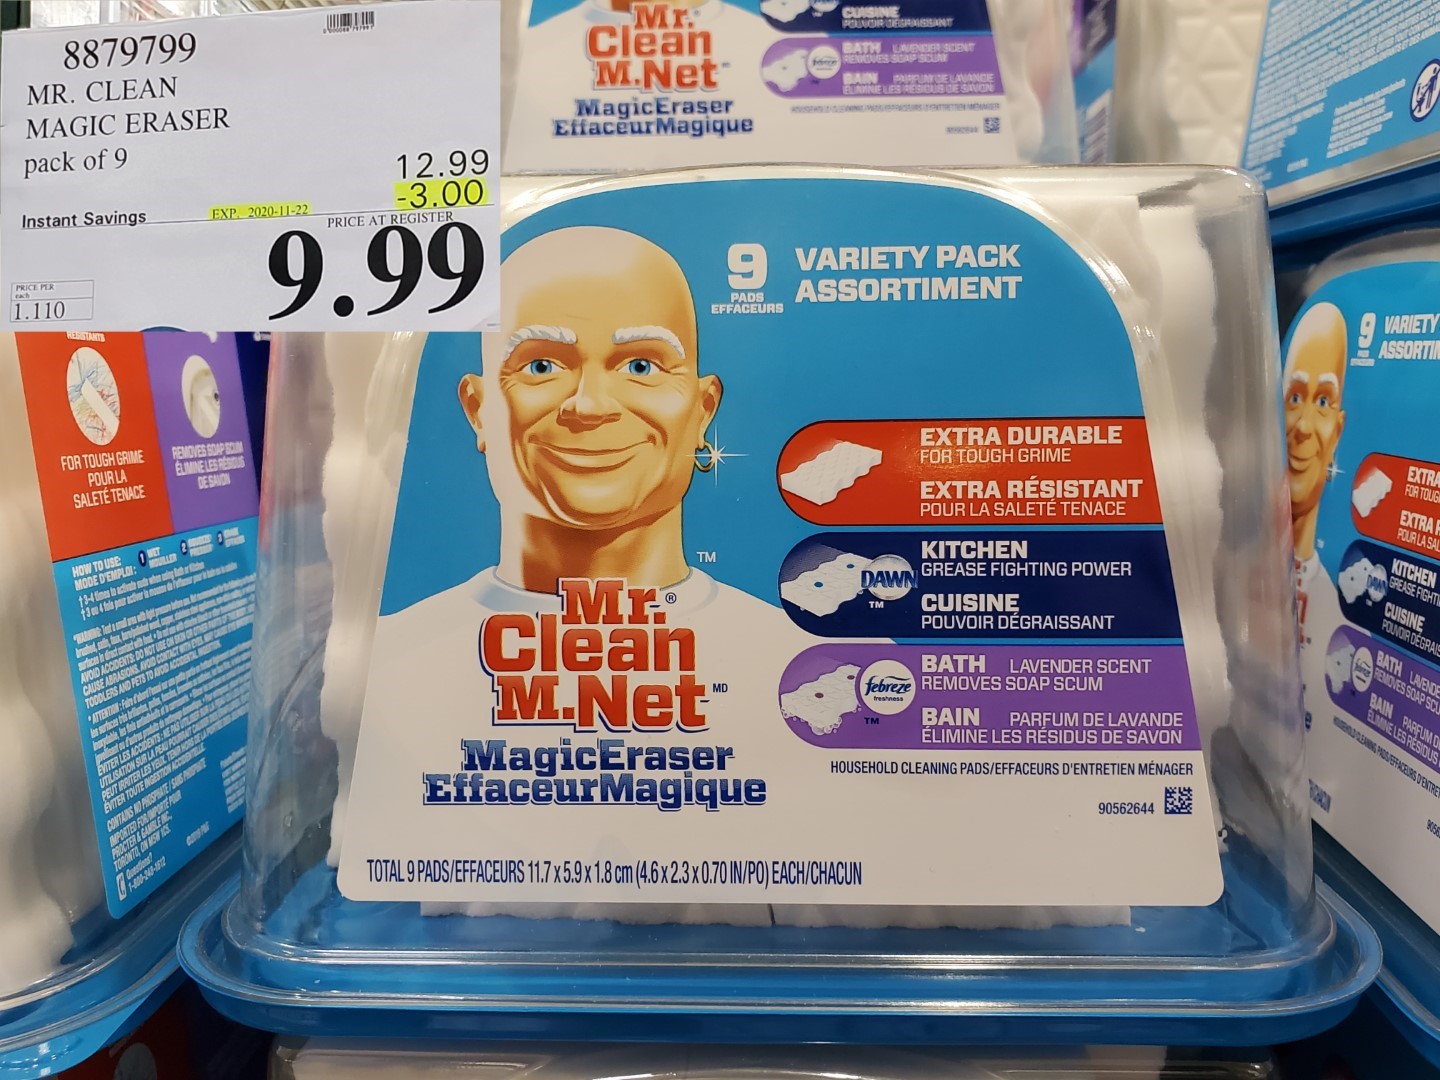 Mr. Clean magic eraser